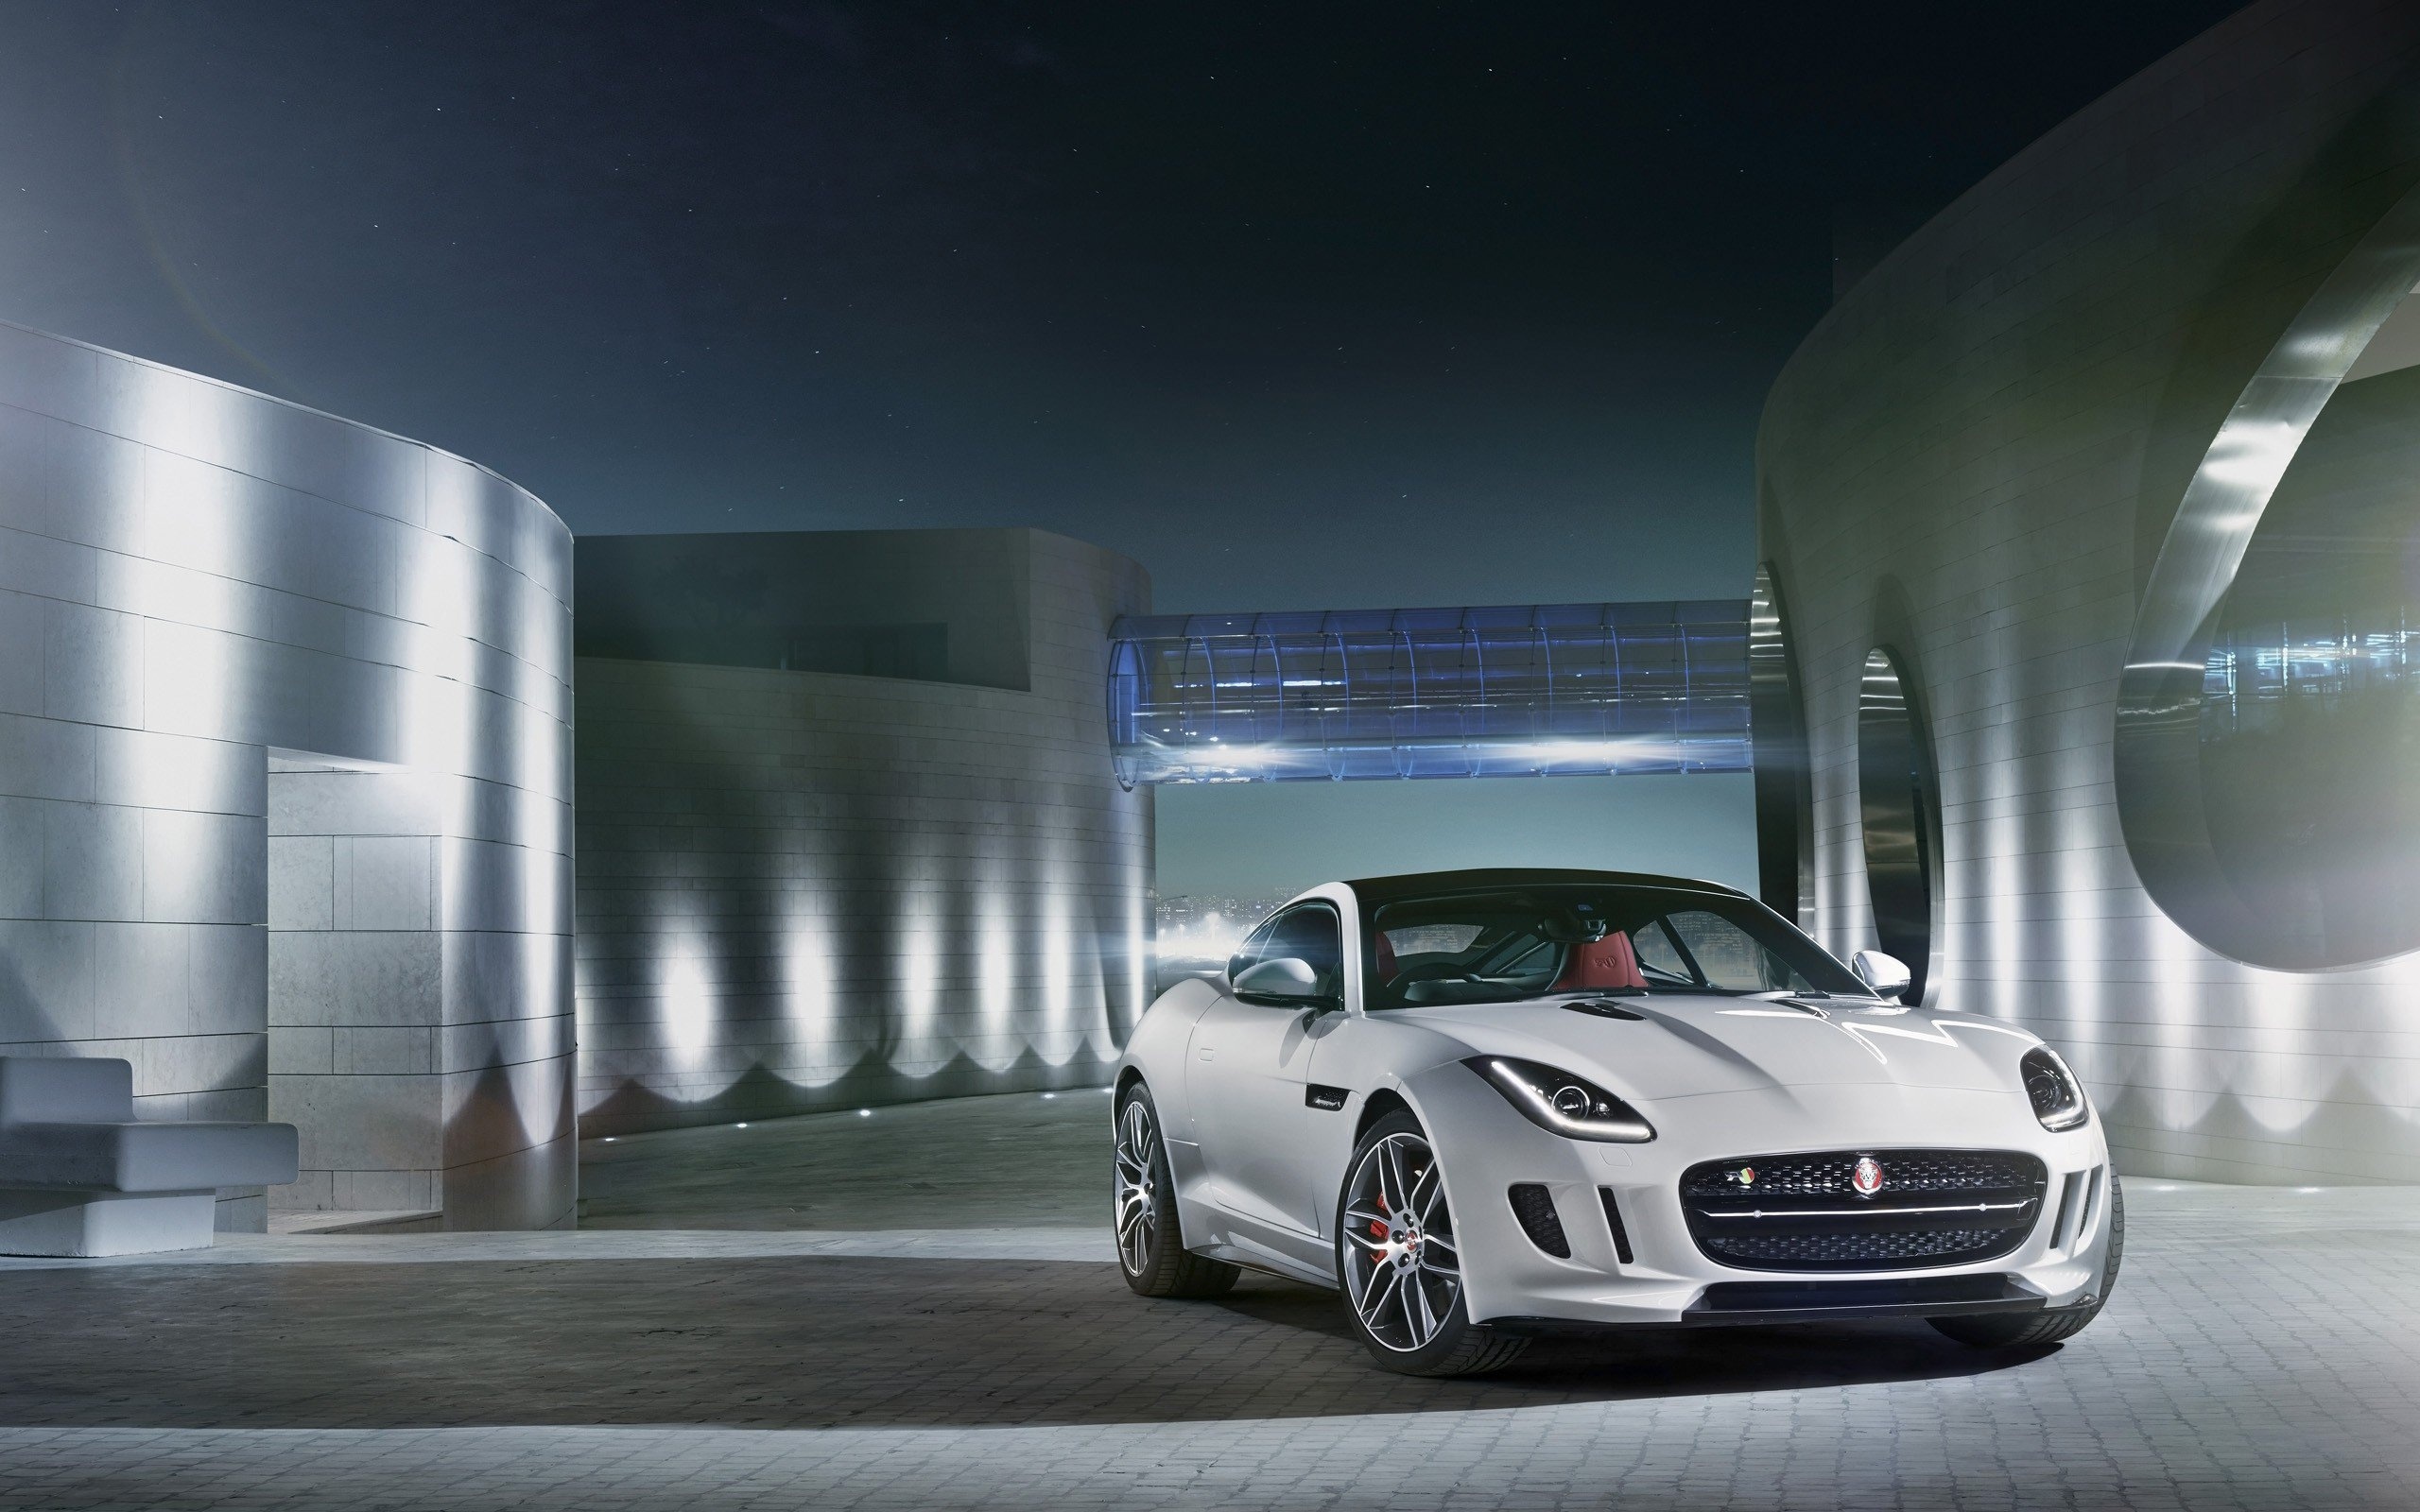 Jaguar F-TYPE, Coupe HD wallpapers, Luxury sports car, Stunning visuals, 2560x1600 HD Desktop